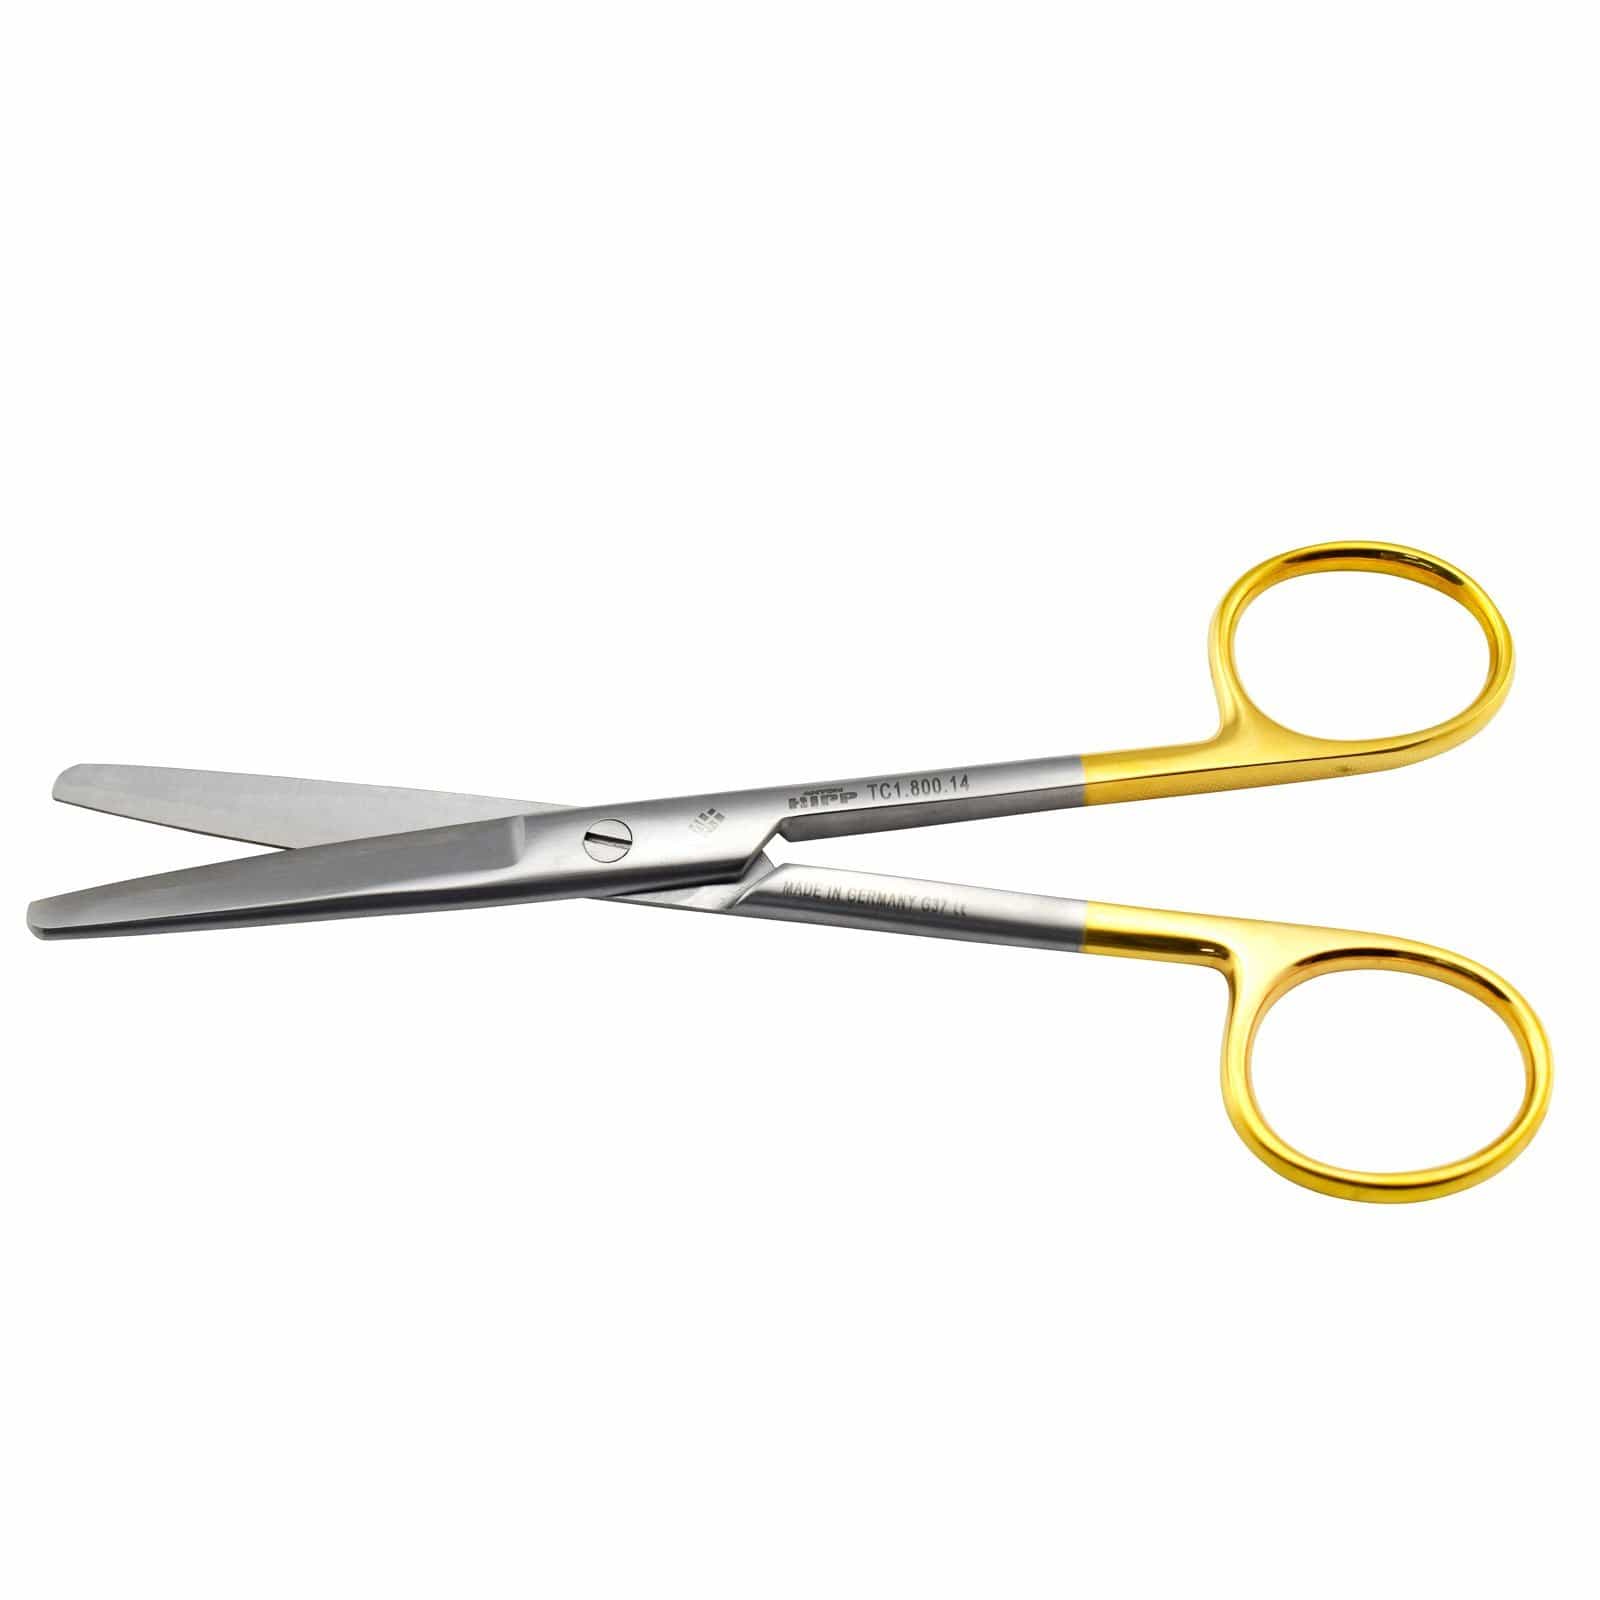 Hipp Surgical Instruments 14.5cm / Straight +TC / Blunt/Blunt Hipp Surgical Scissors